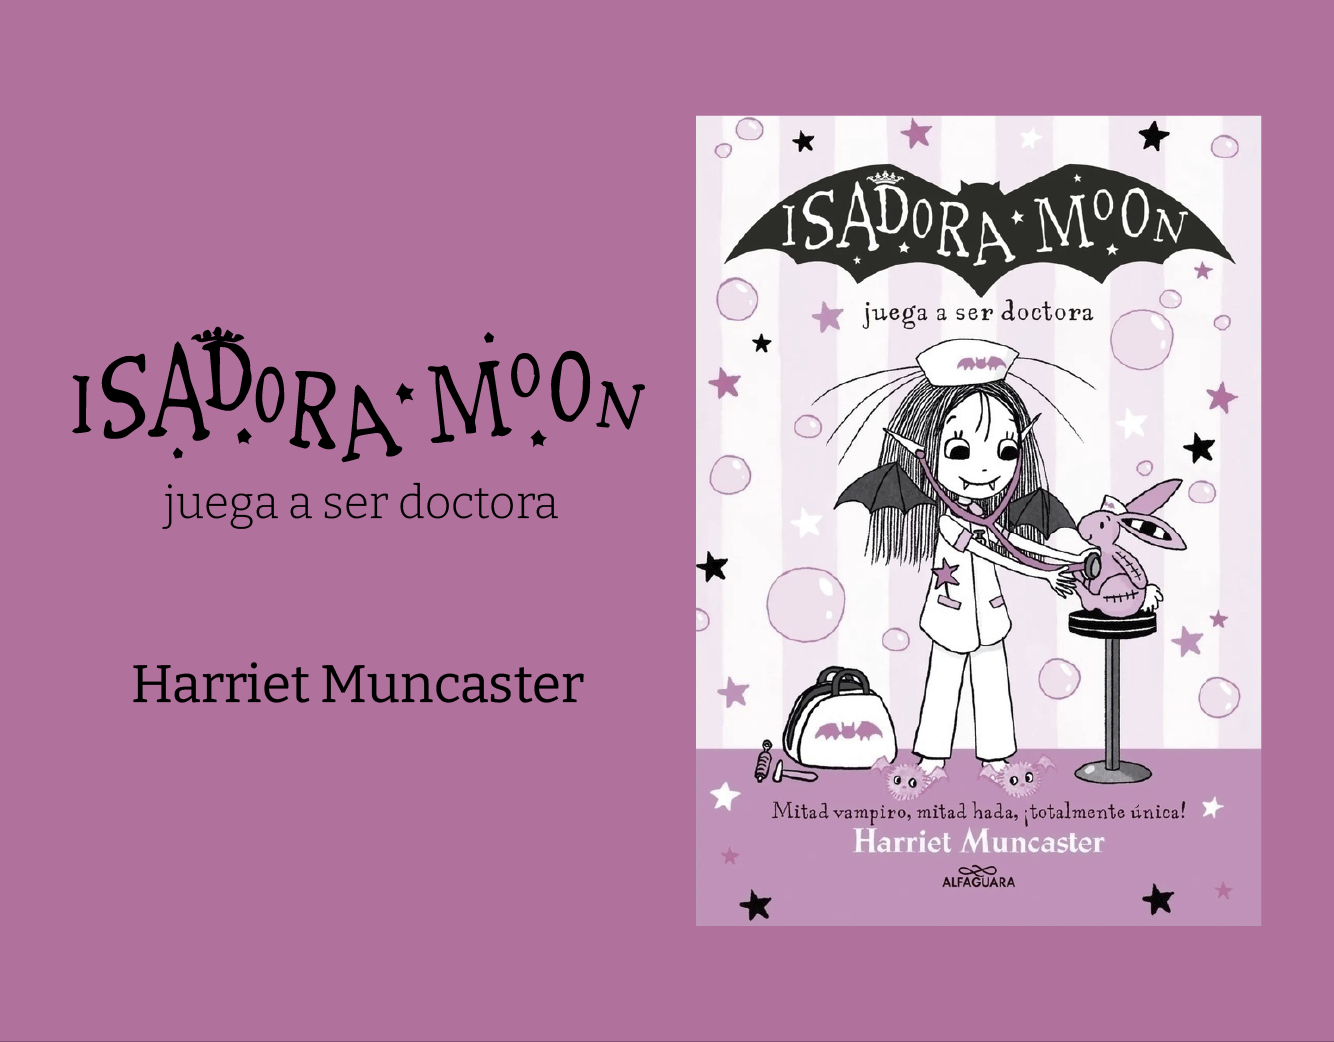 Isadora Moon juega a ser doctora